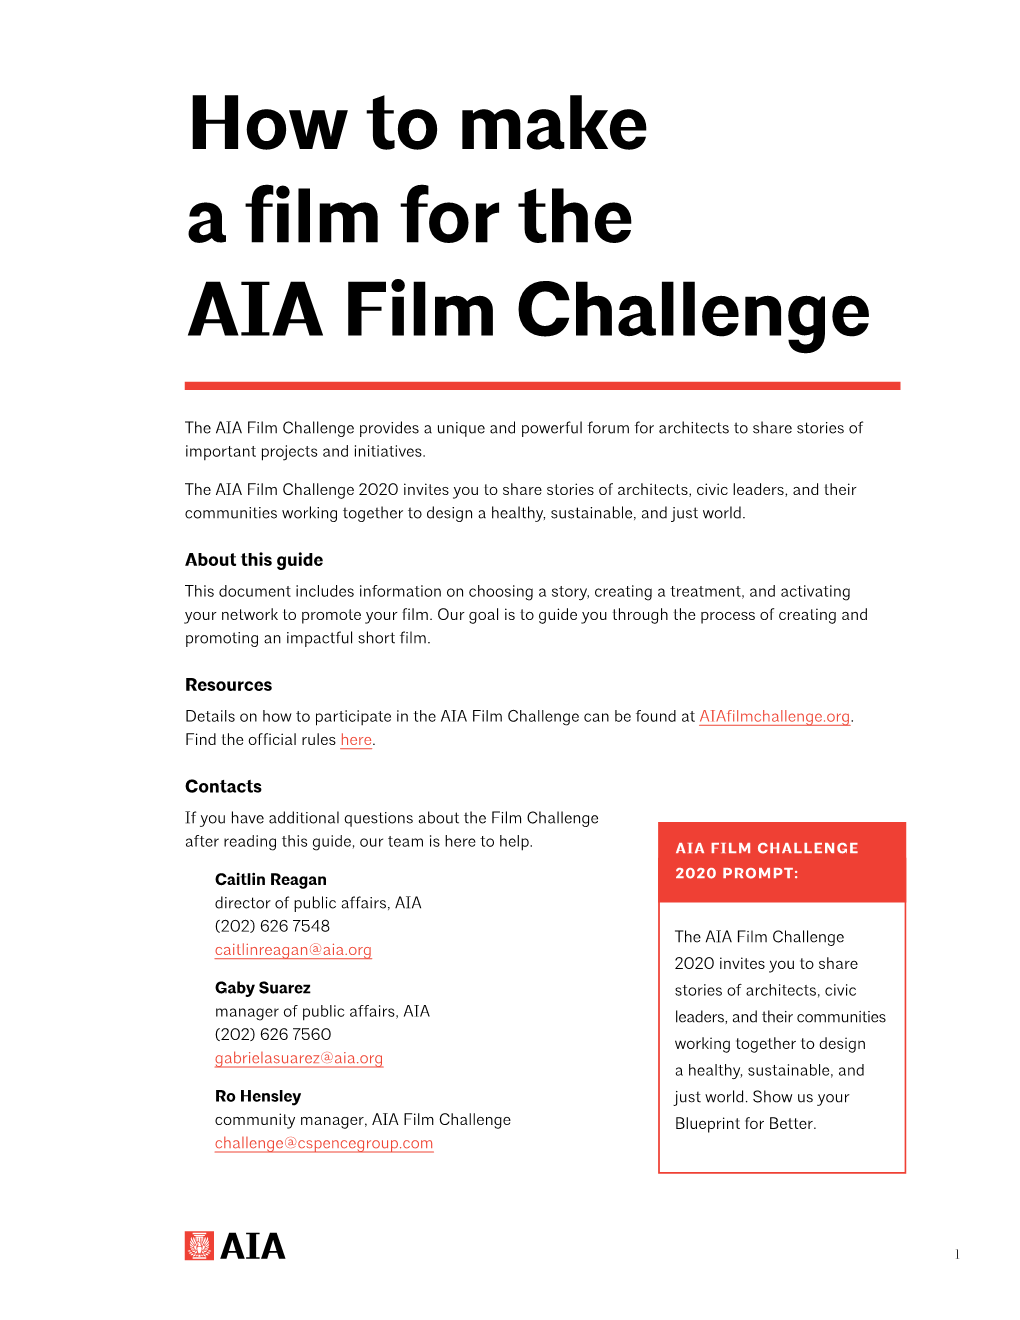 AIA Film Challenge 2020